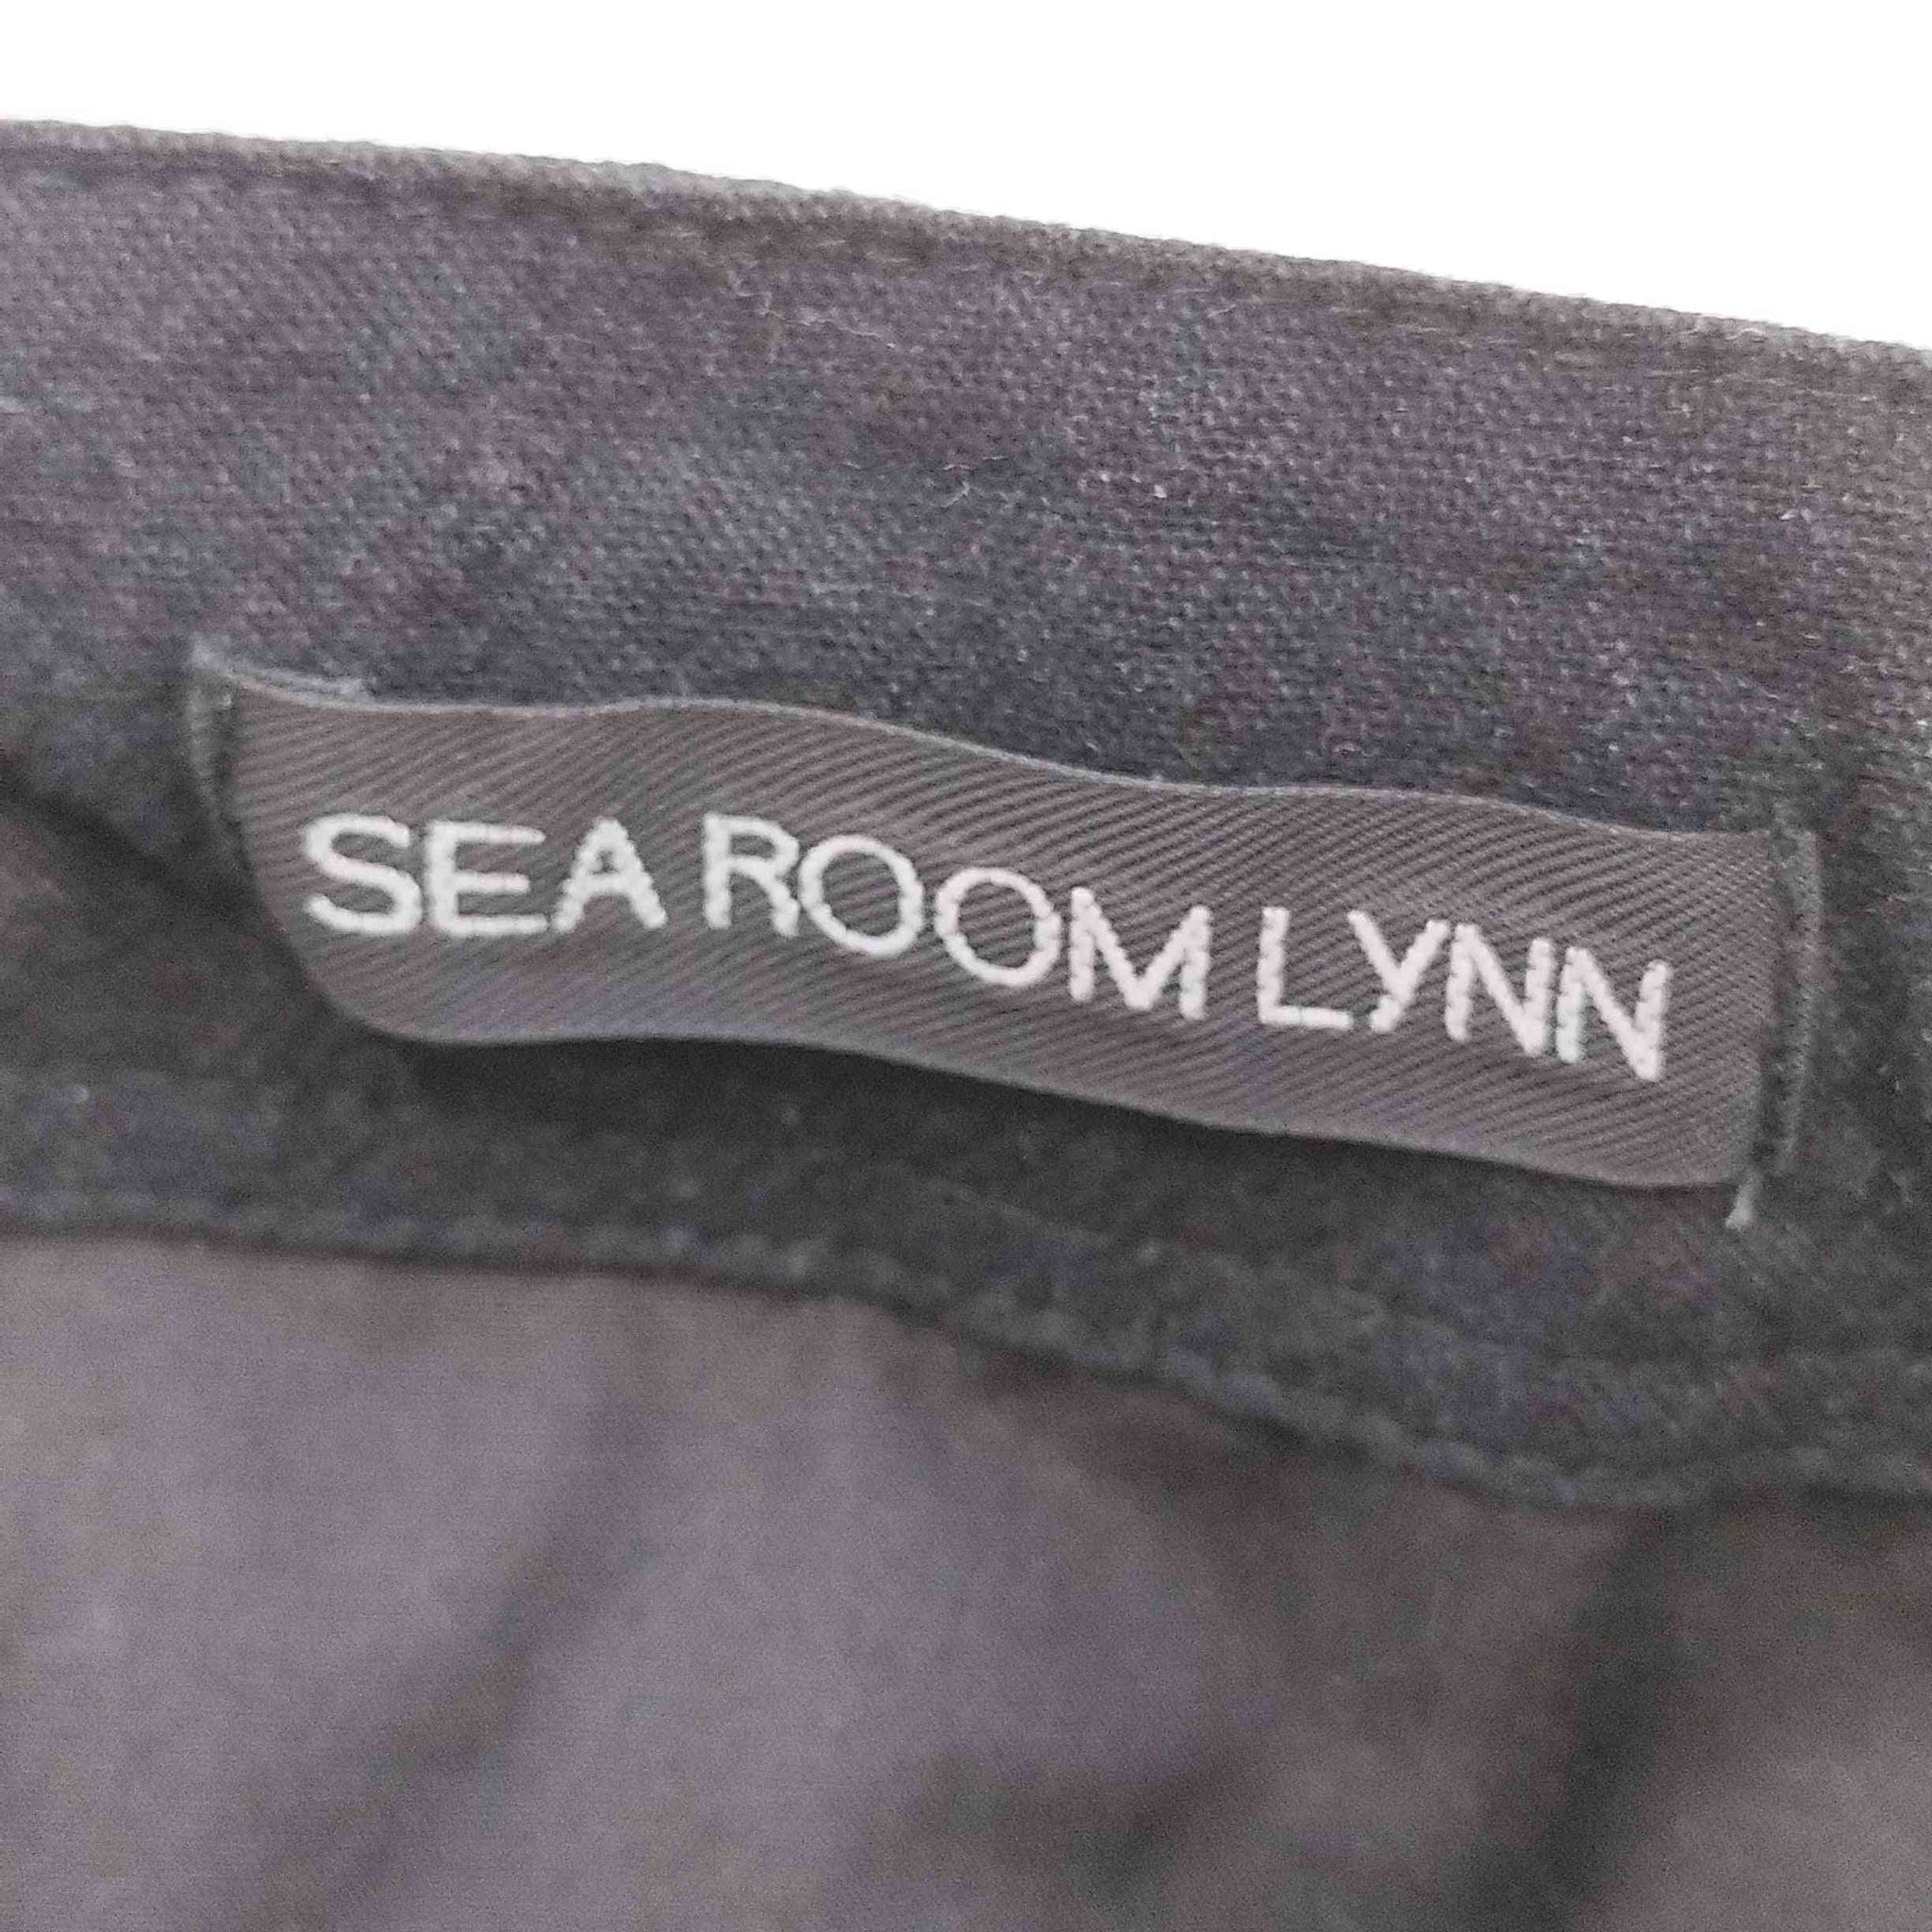 Sea Room lynn(シールームリン)クレープコットンワークサロペット